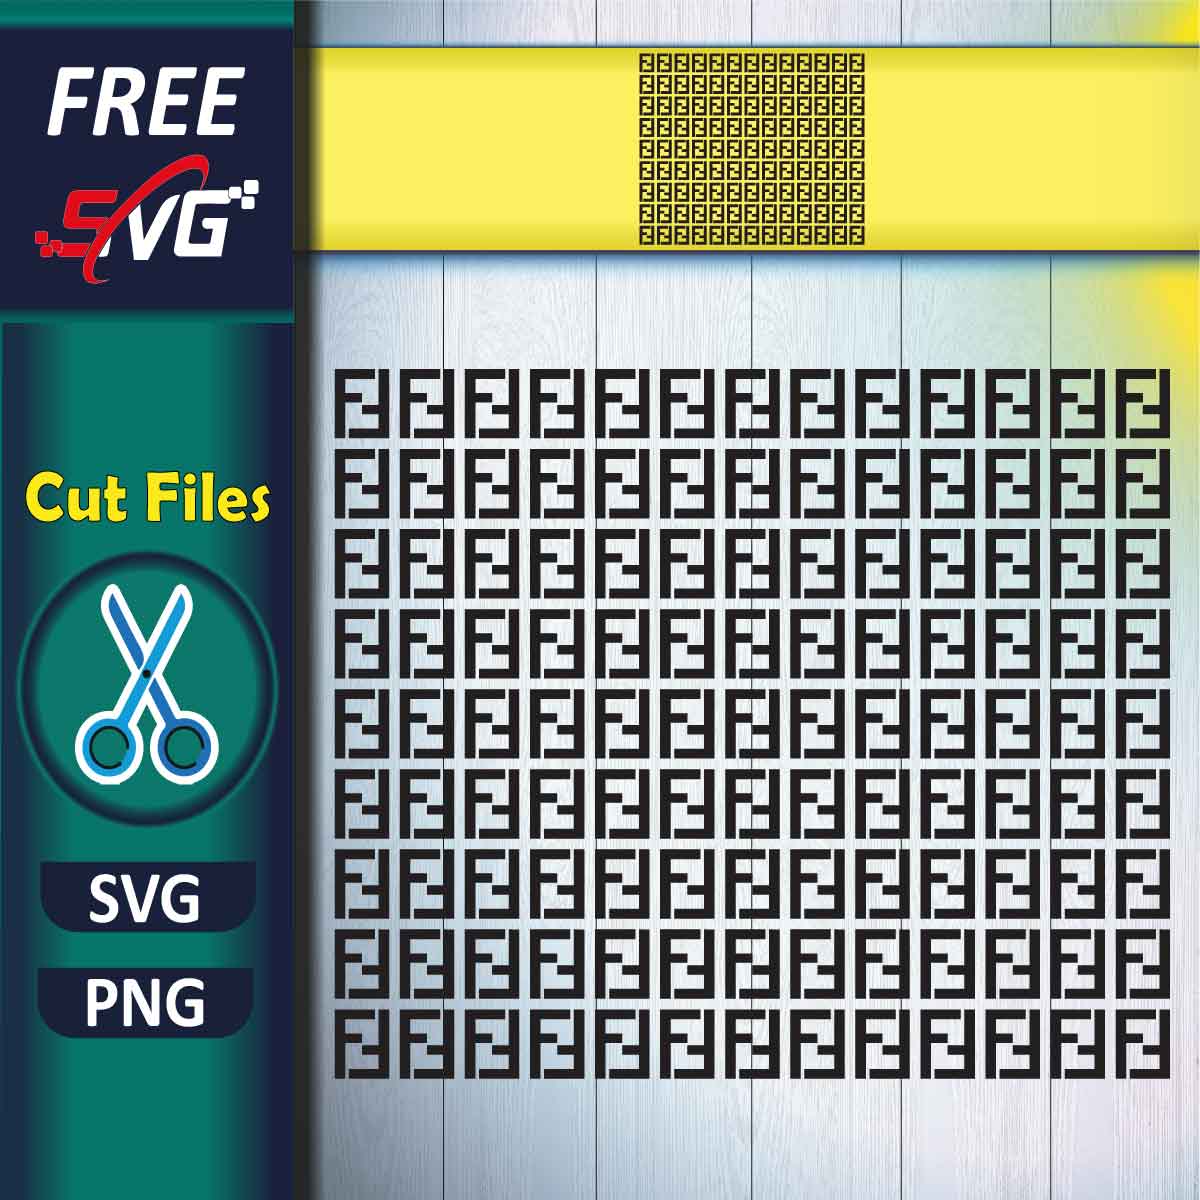 Fendi logo pattern SVG Free, Cut files for Cricut